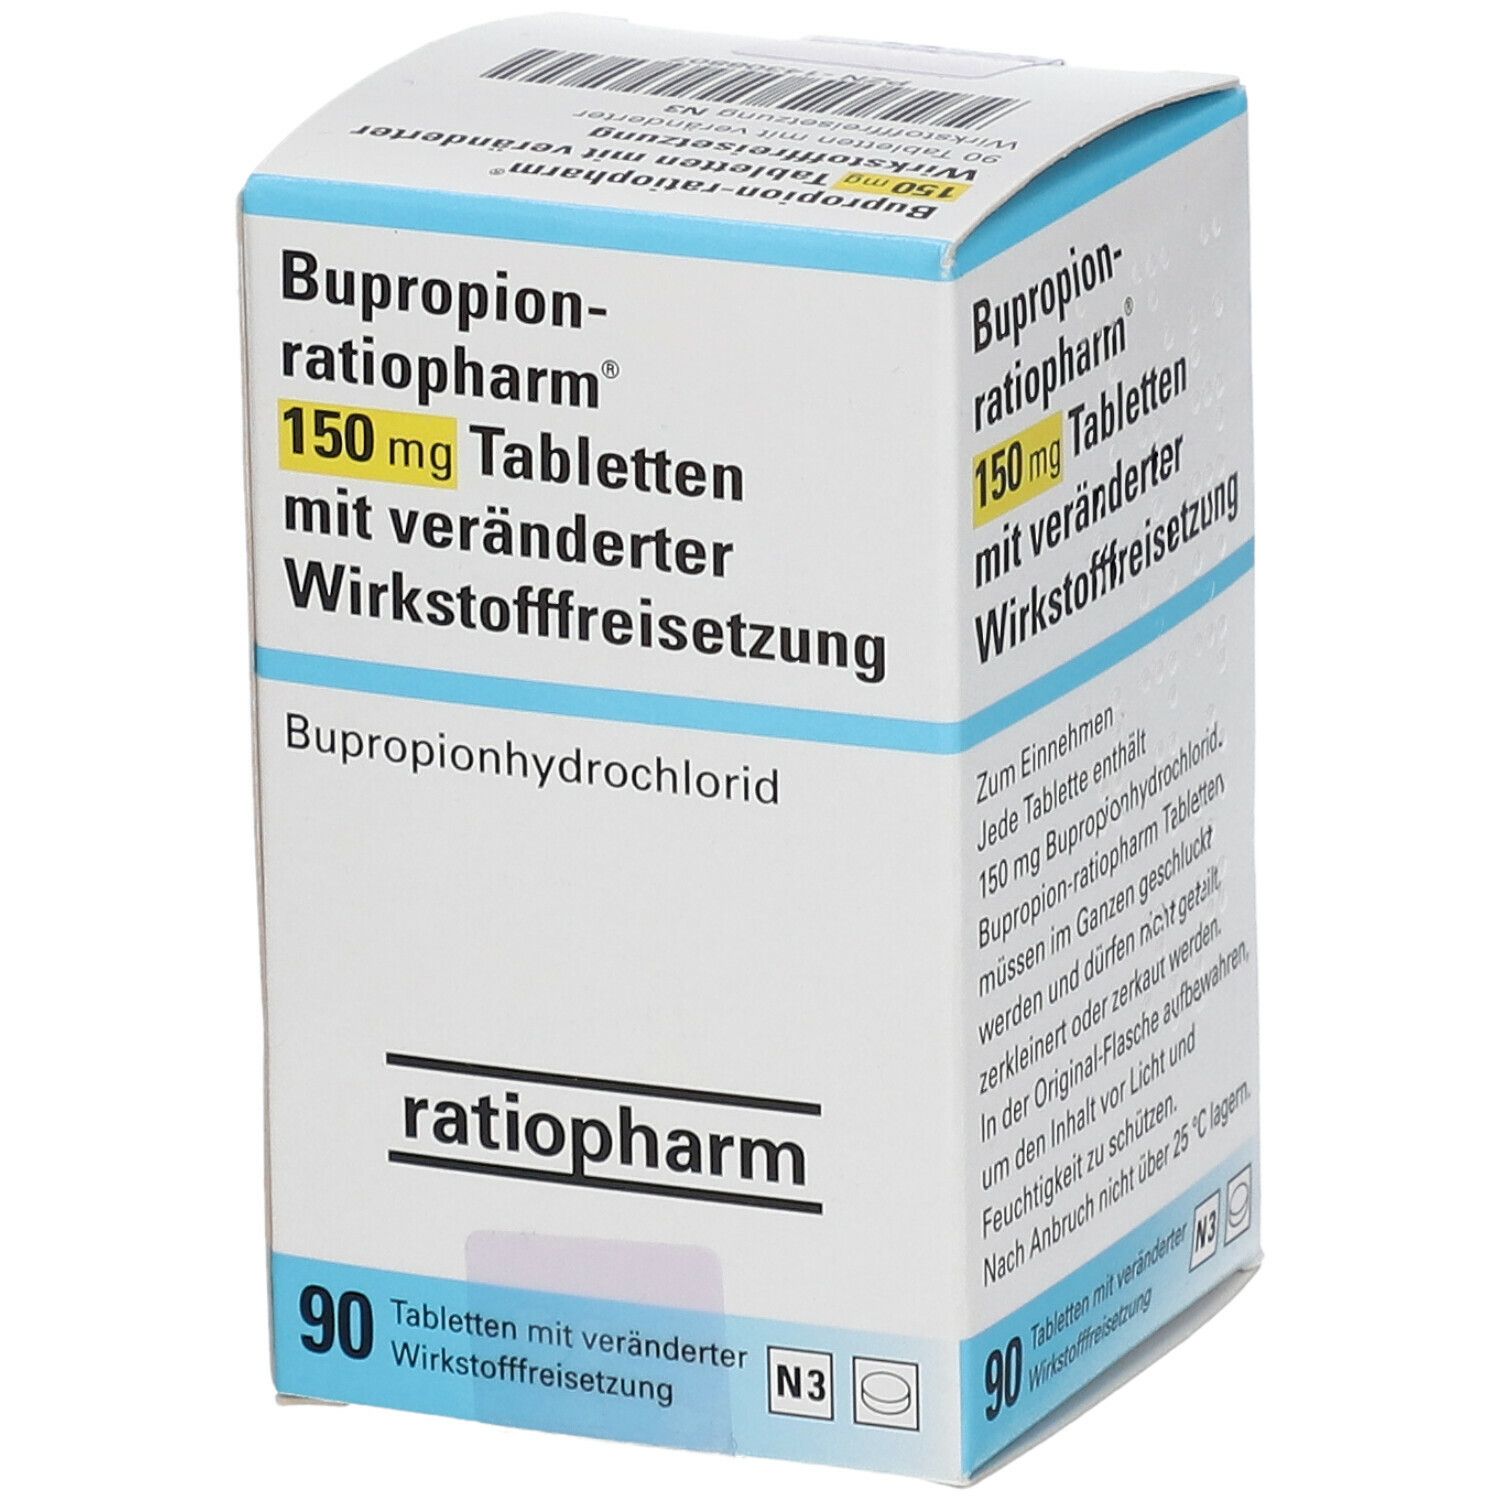 Bupropion ratiopharm® 150 mg